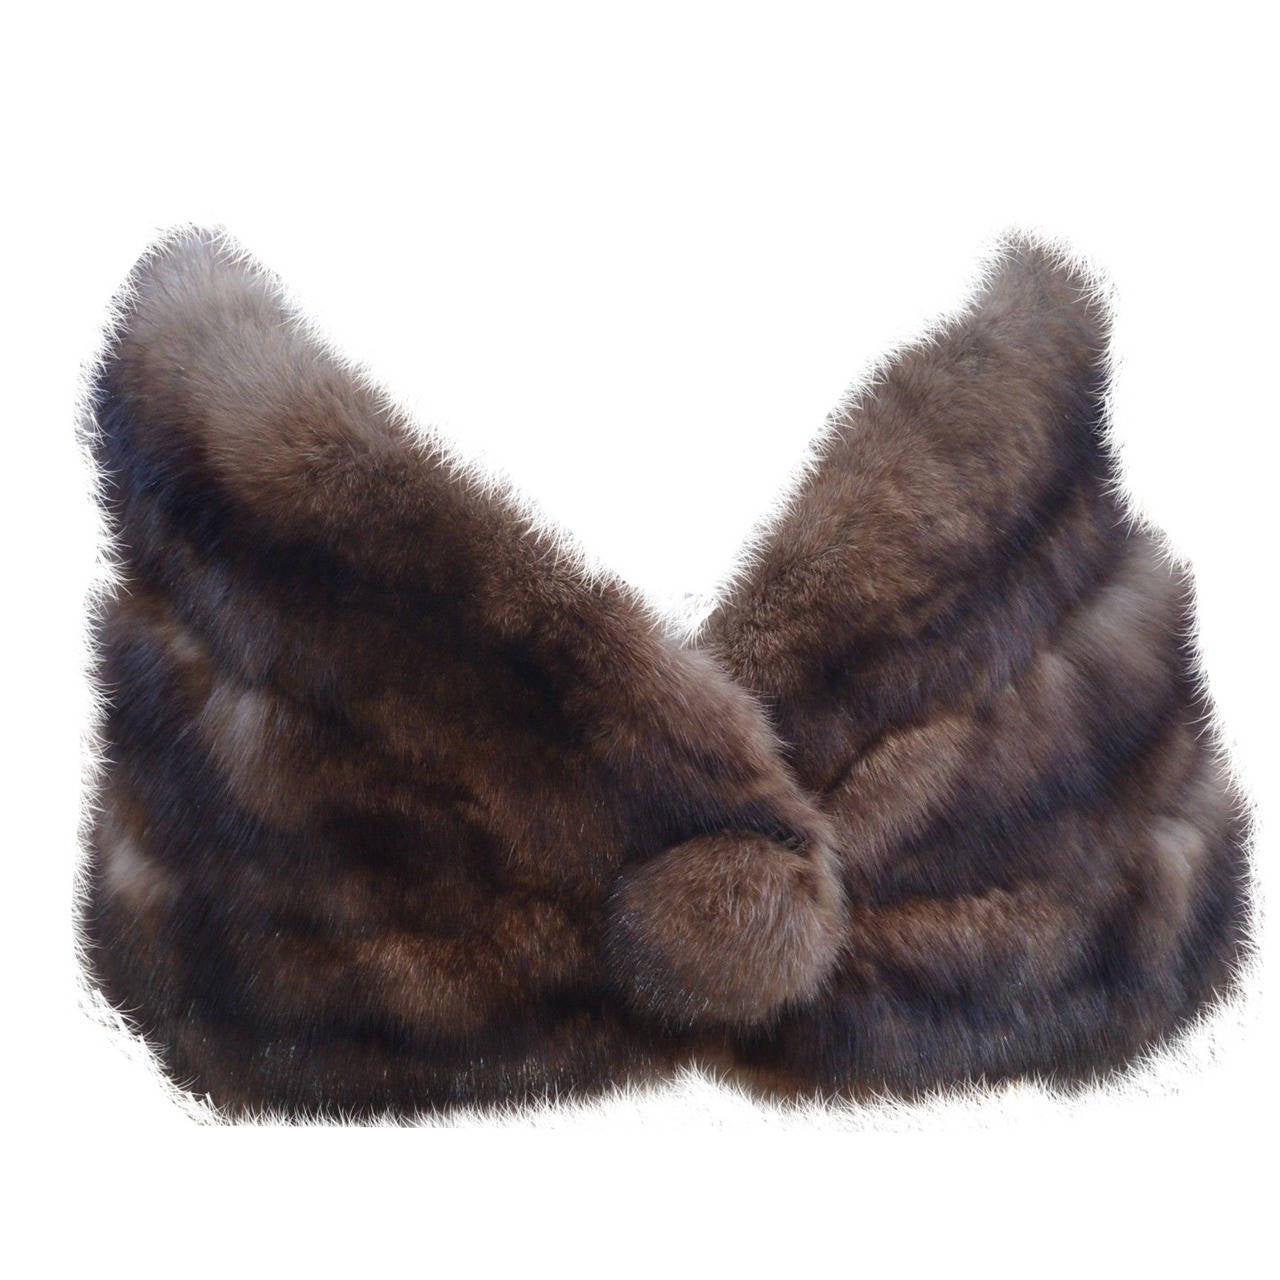 Russian Sable stole Foettingers Furs